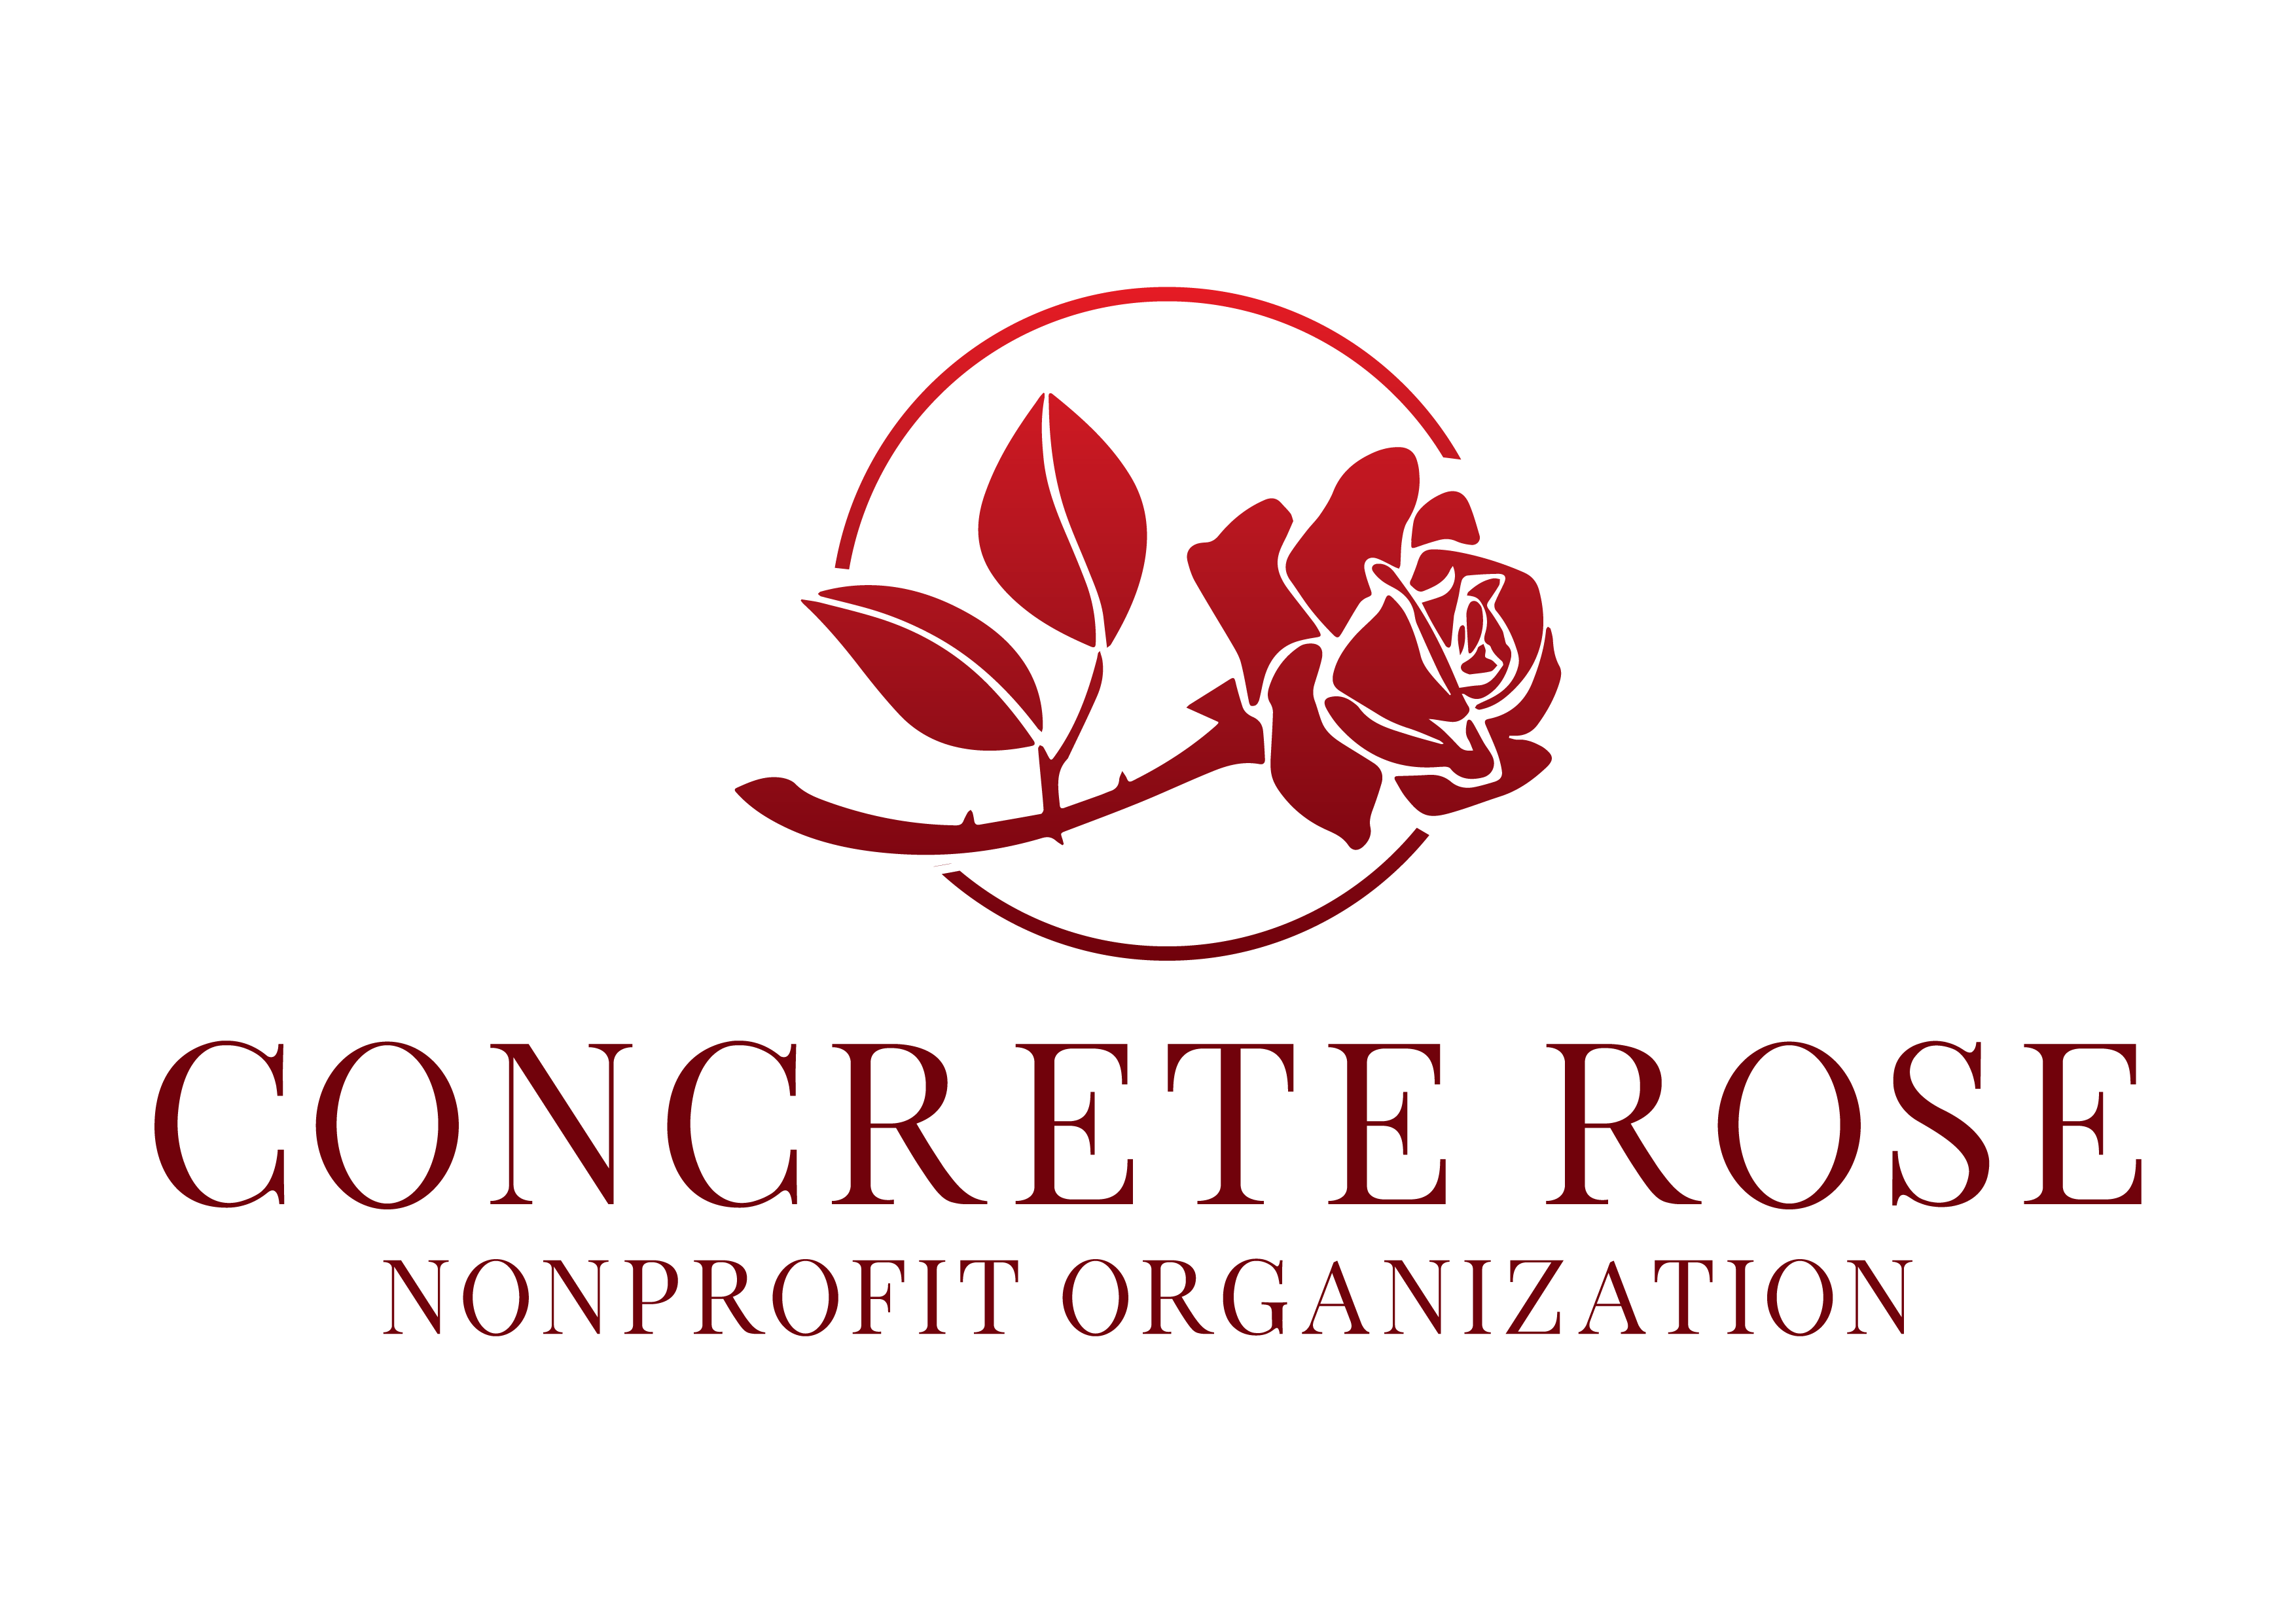 Concrete Rose Nonprofit Organization logo